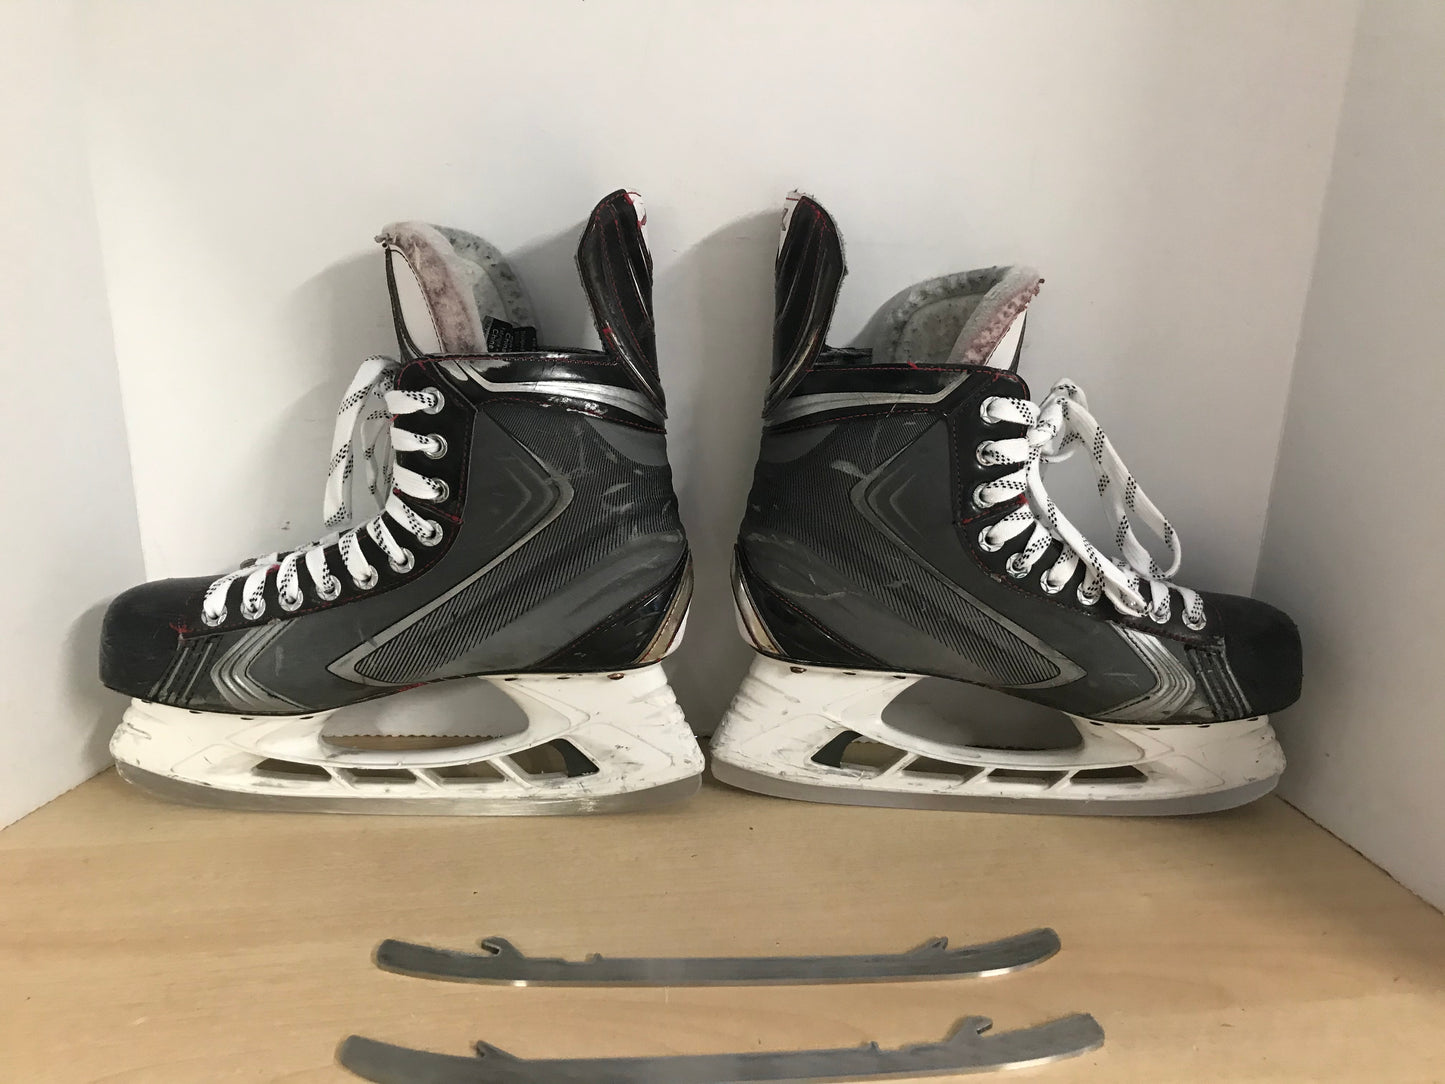 Hockey Skates Men's Size 10 Shoe Size Bauer Vapor X Shift With 2nd Set Blades Very Nice